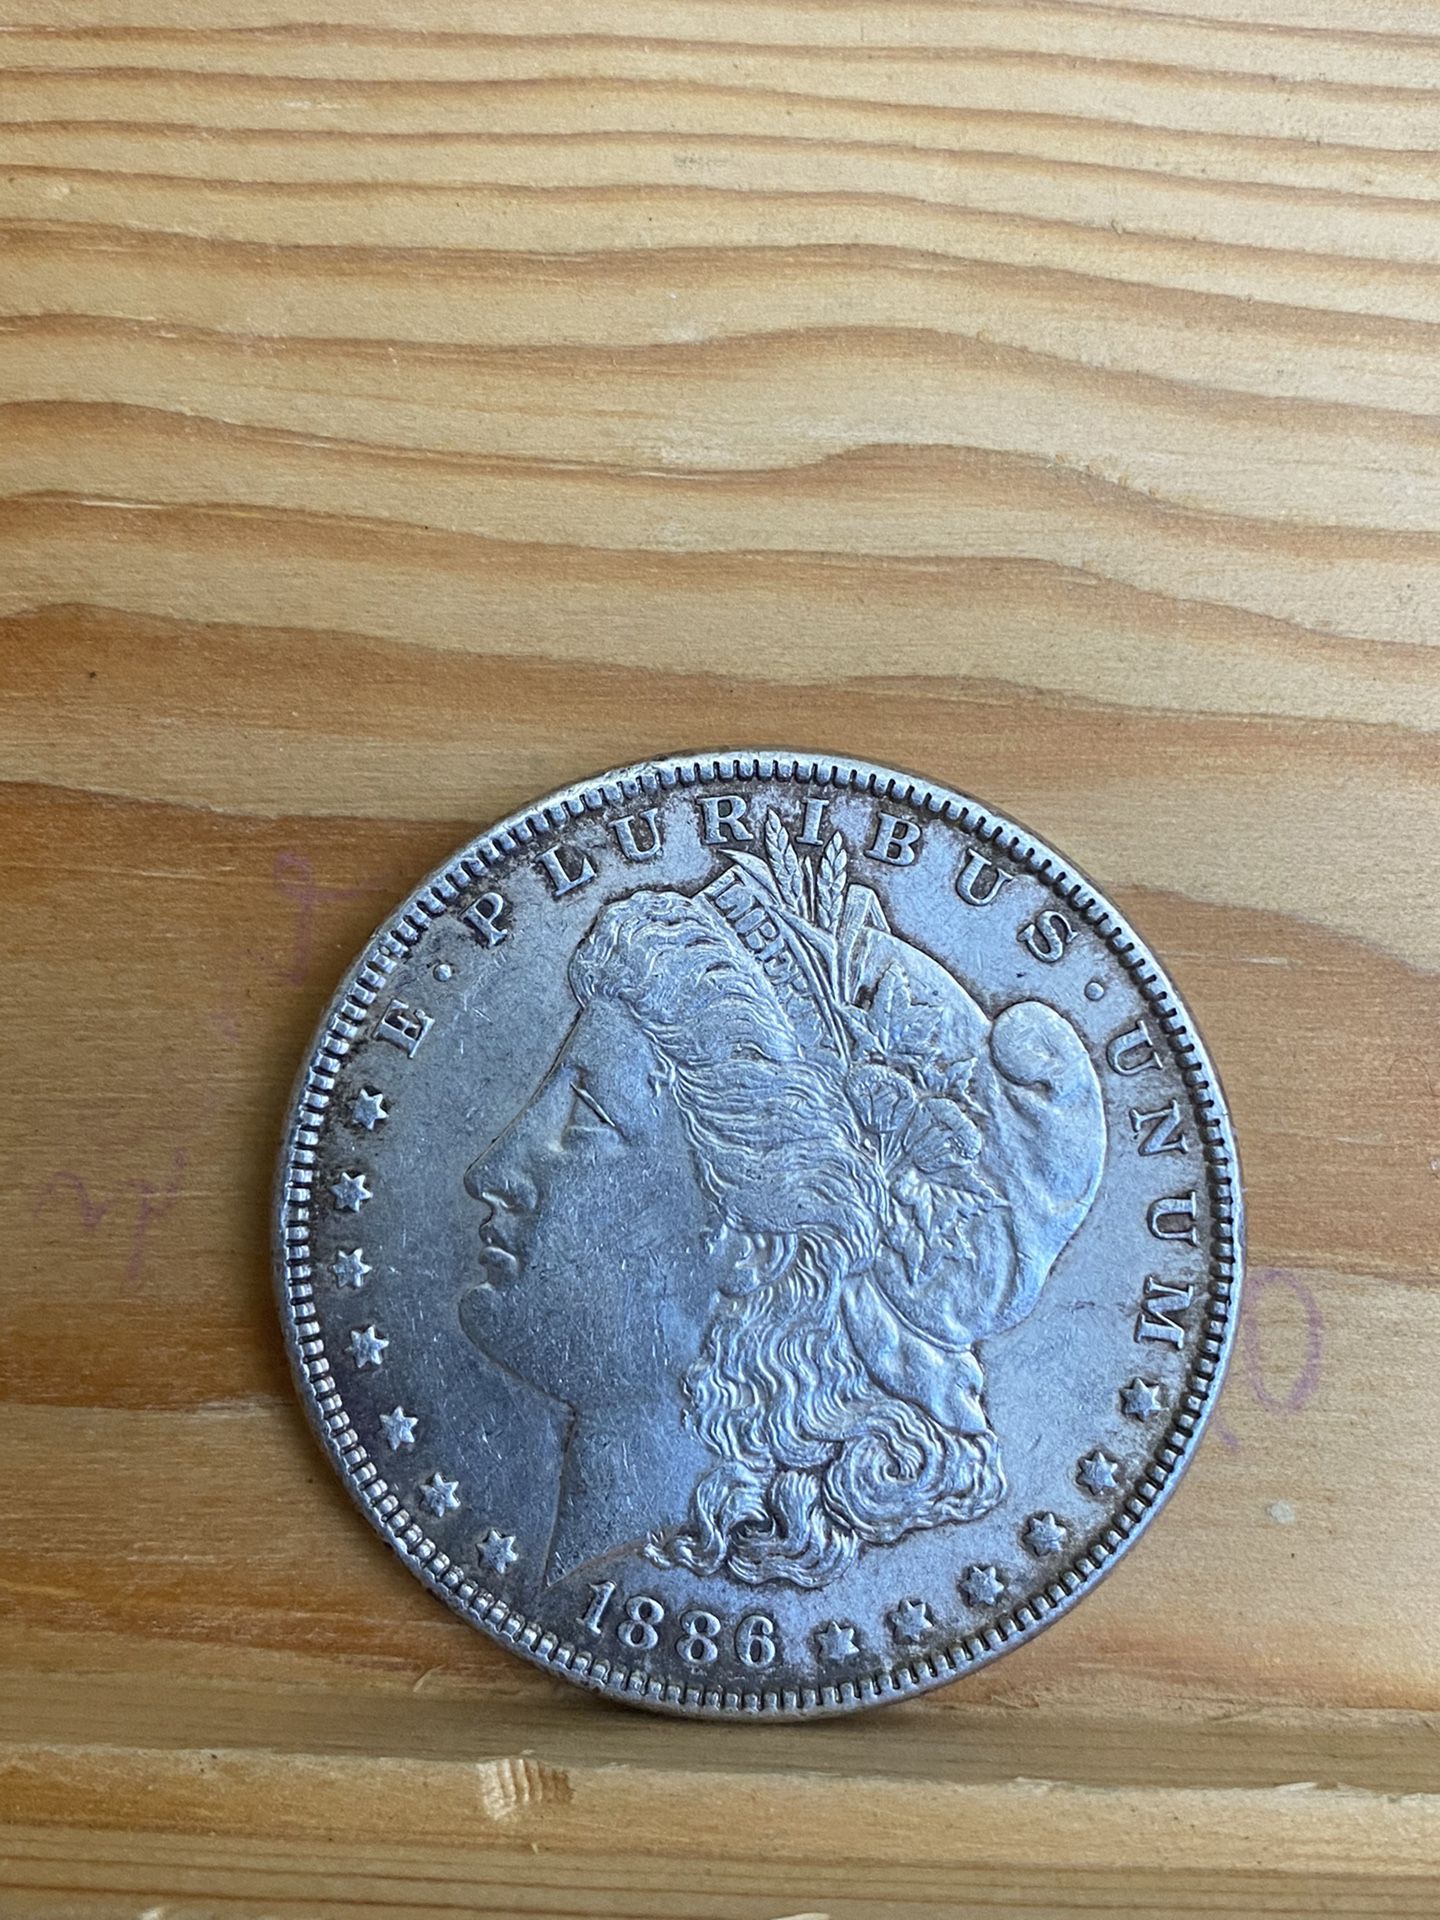 1886 Morgan Silver Dollar  $2430.00